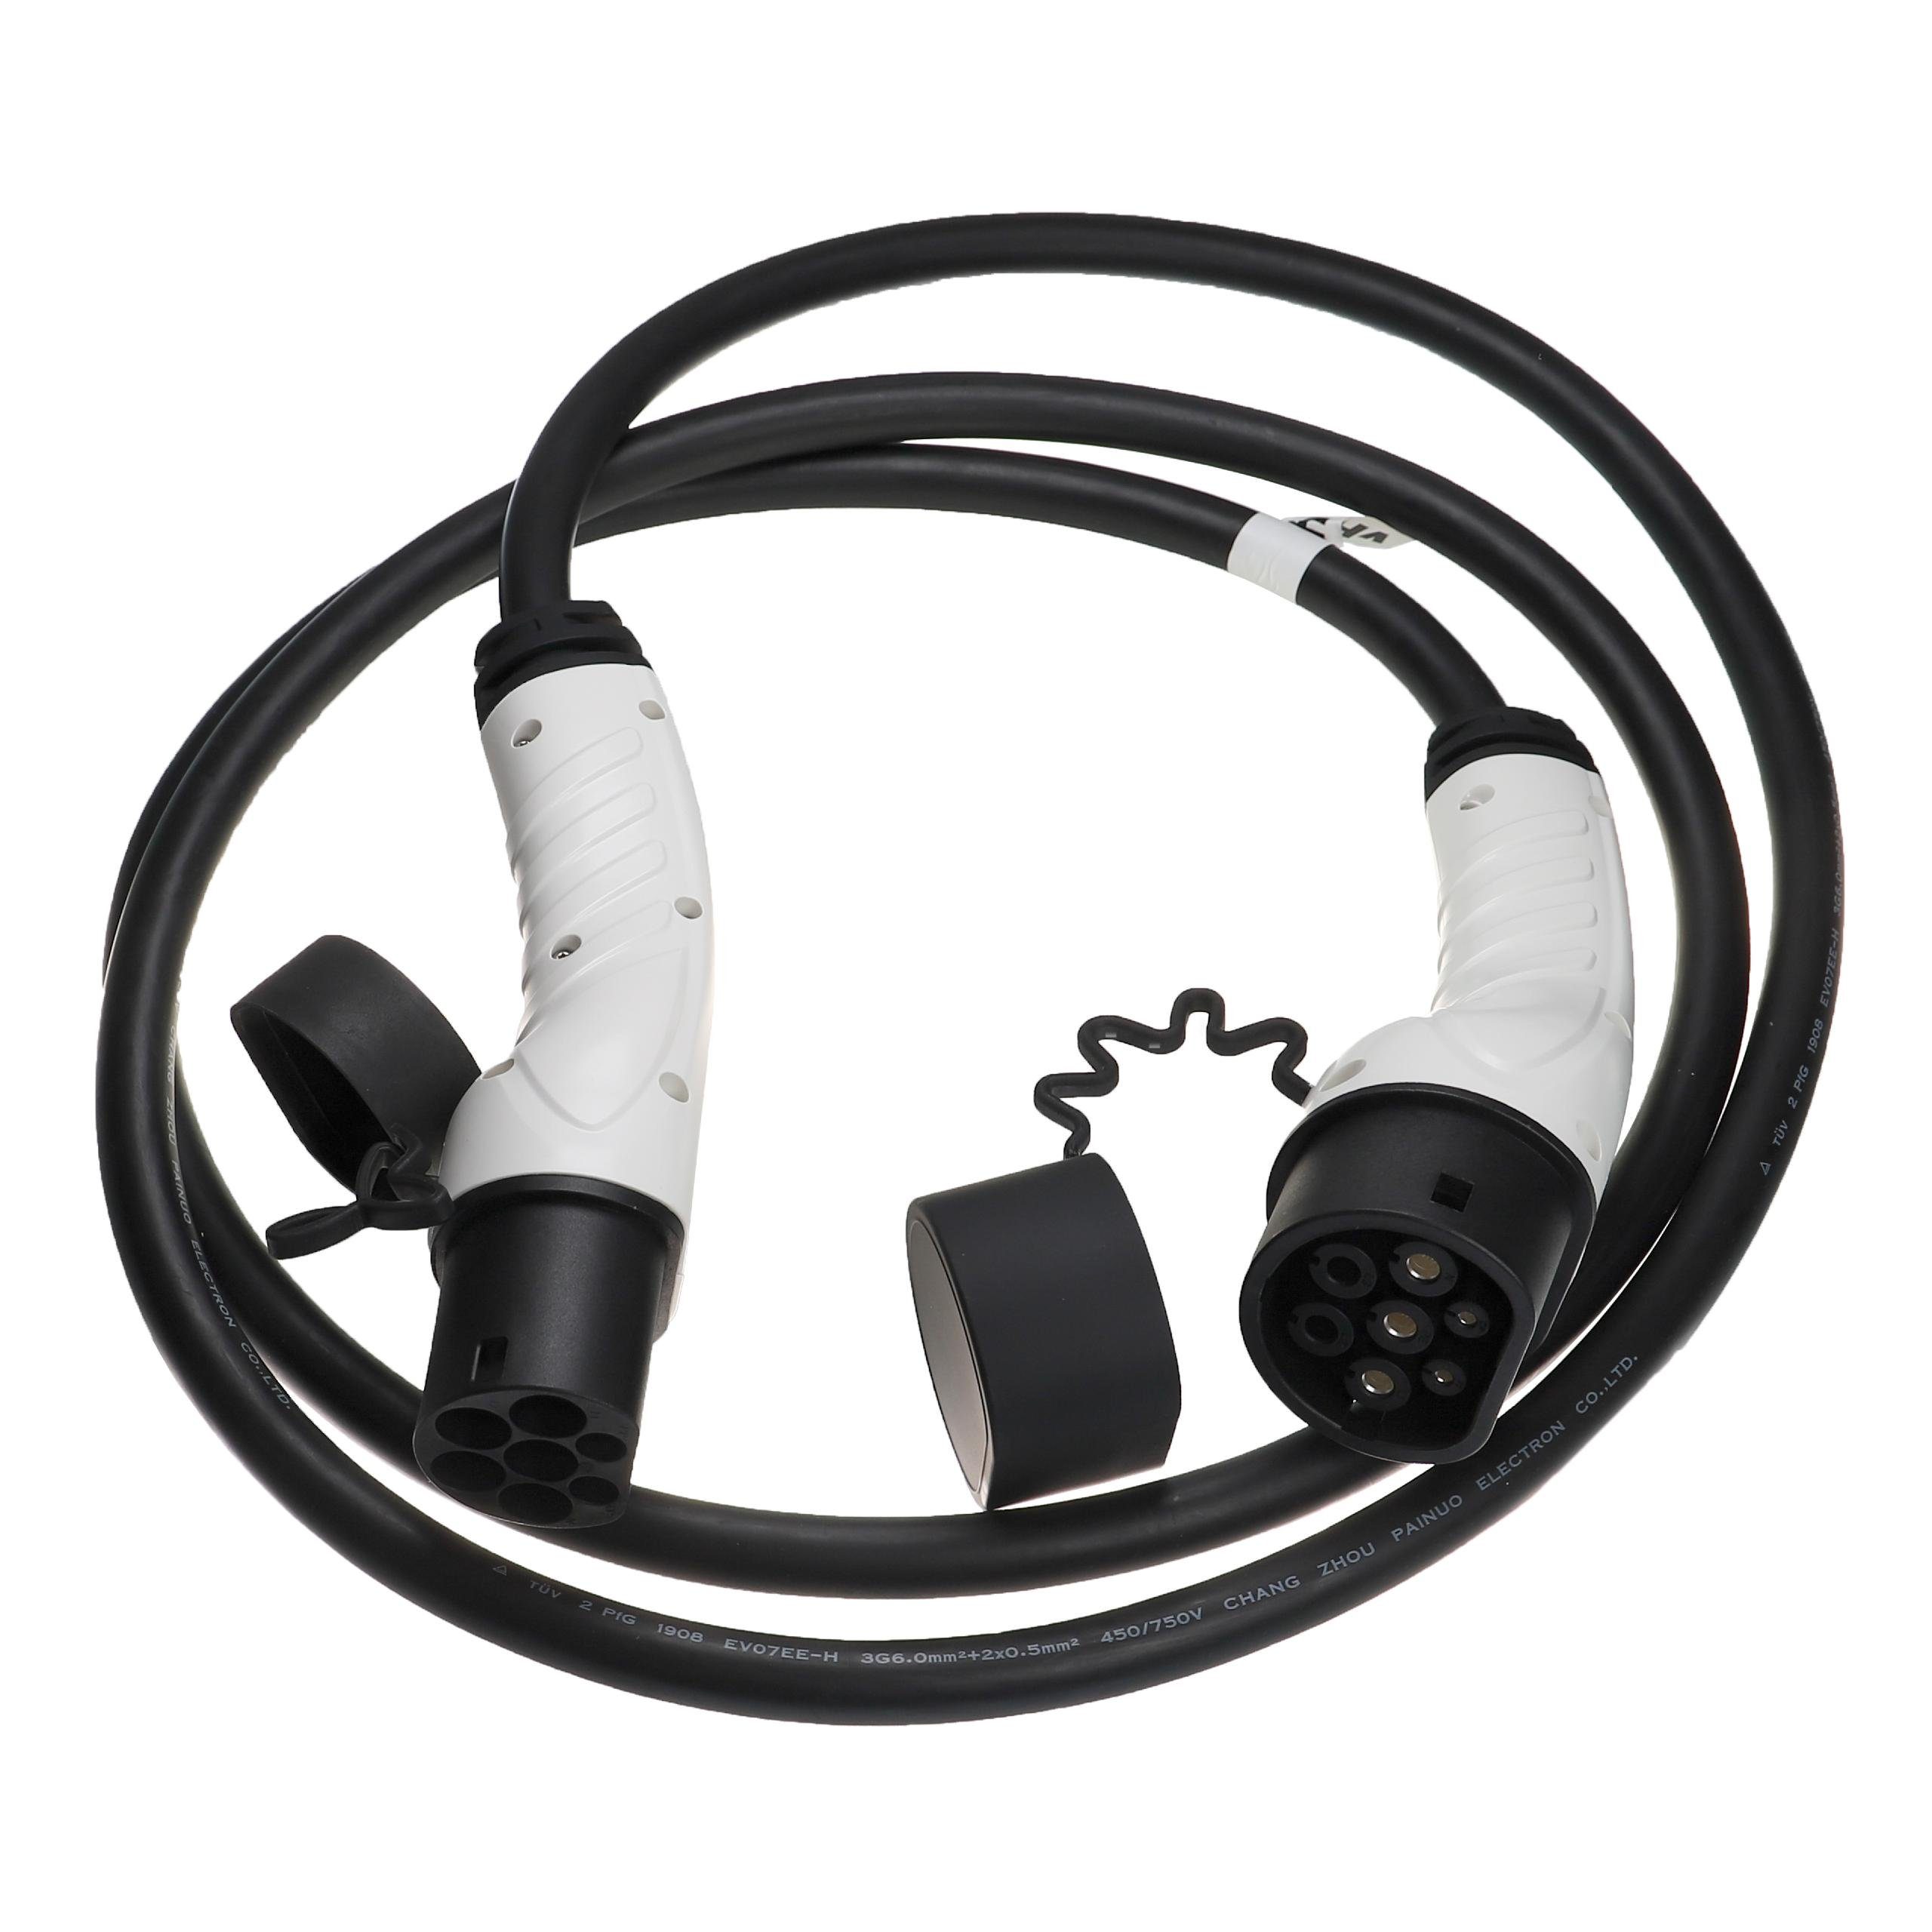 vhbw passend für Plug-in-Hybrid Elektroauto PHEV / Seat Tarraco Elektro-Kabel